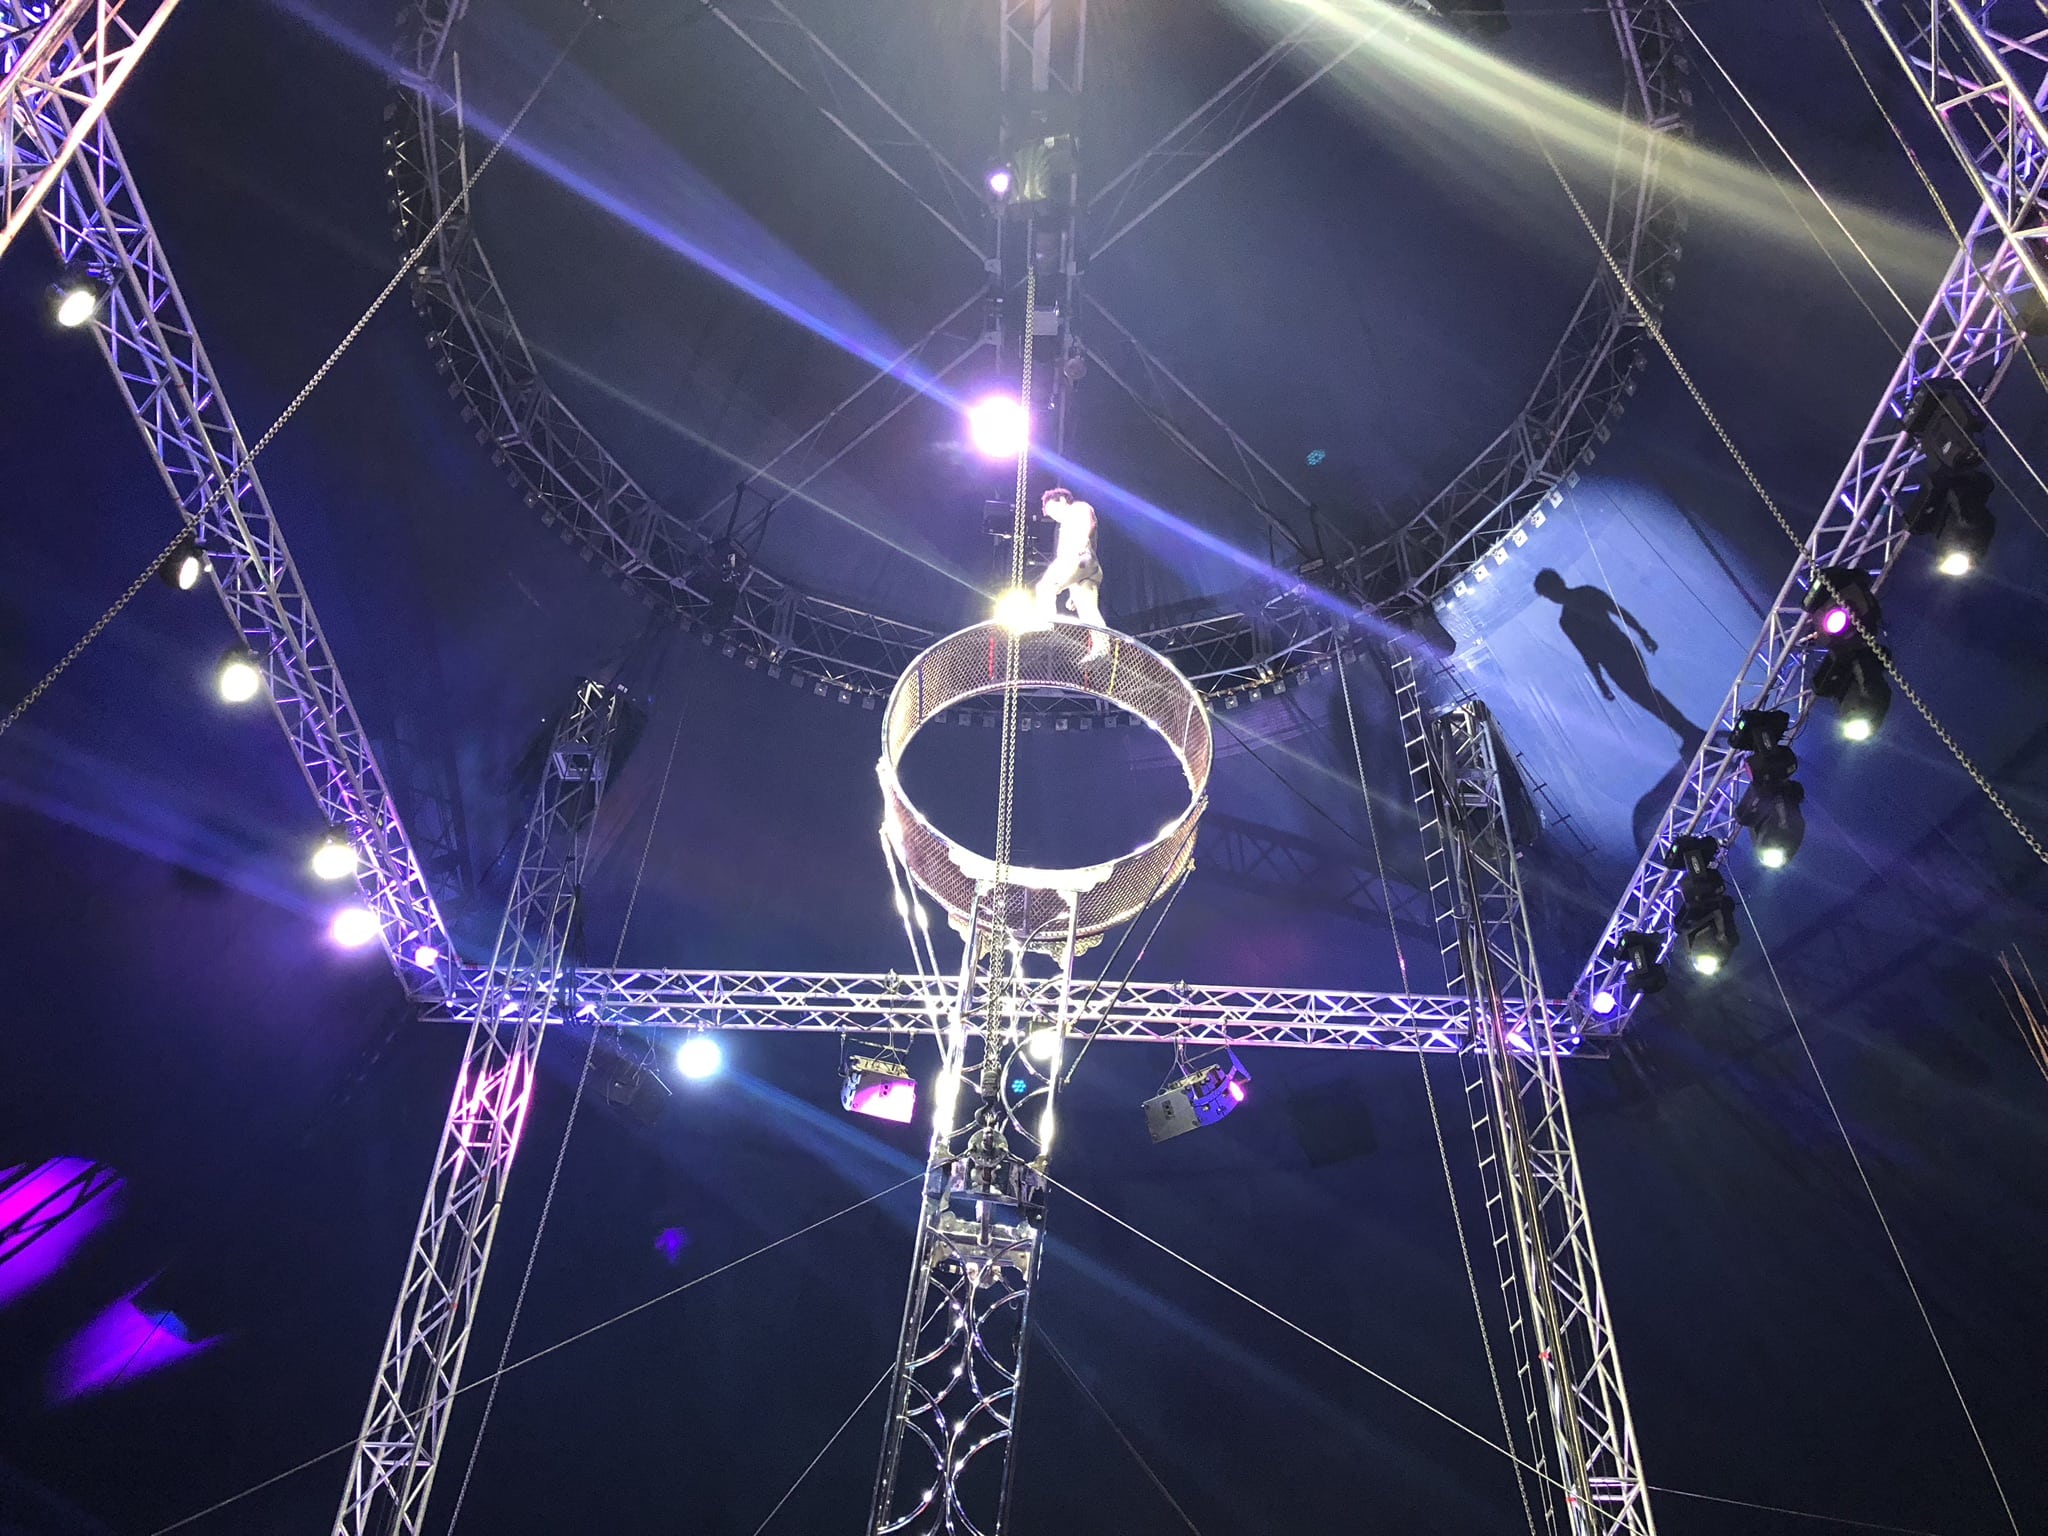 death-defying stunts at Cirque Italia